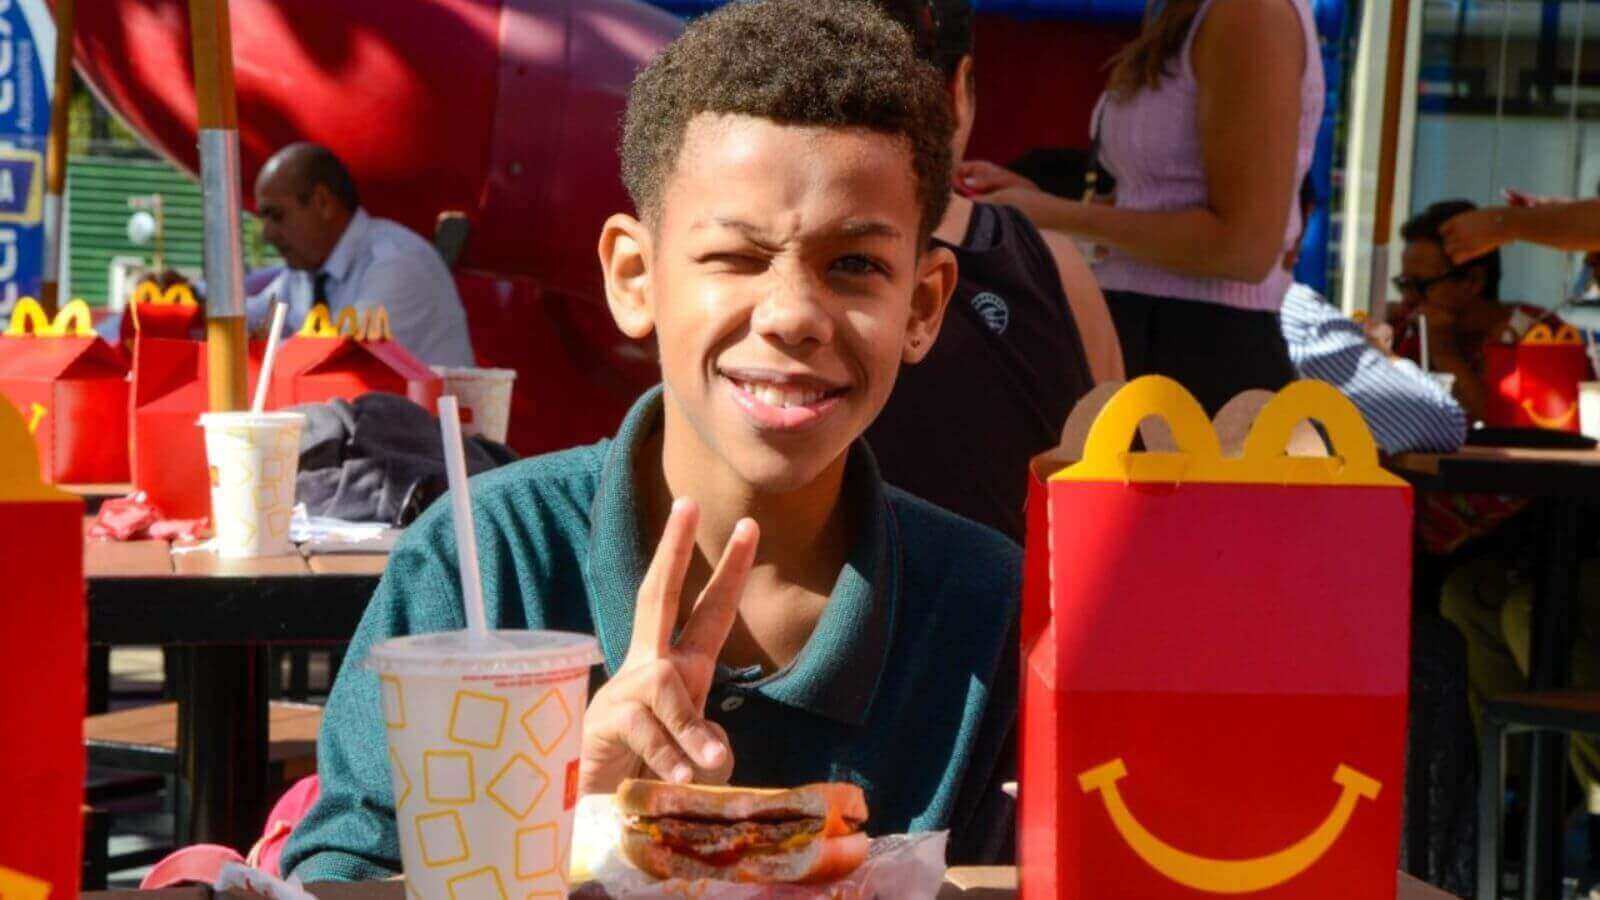 Menino em mesa do McDonald's de Jundiaí, participando do programa Mc Tour